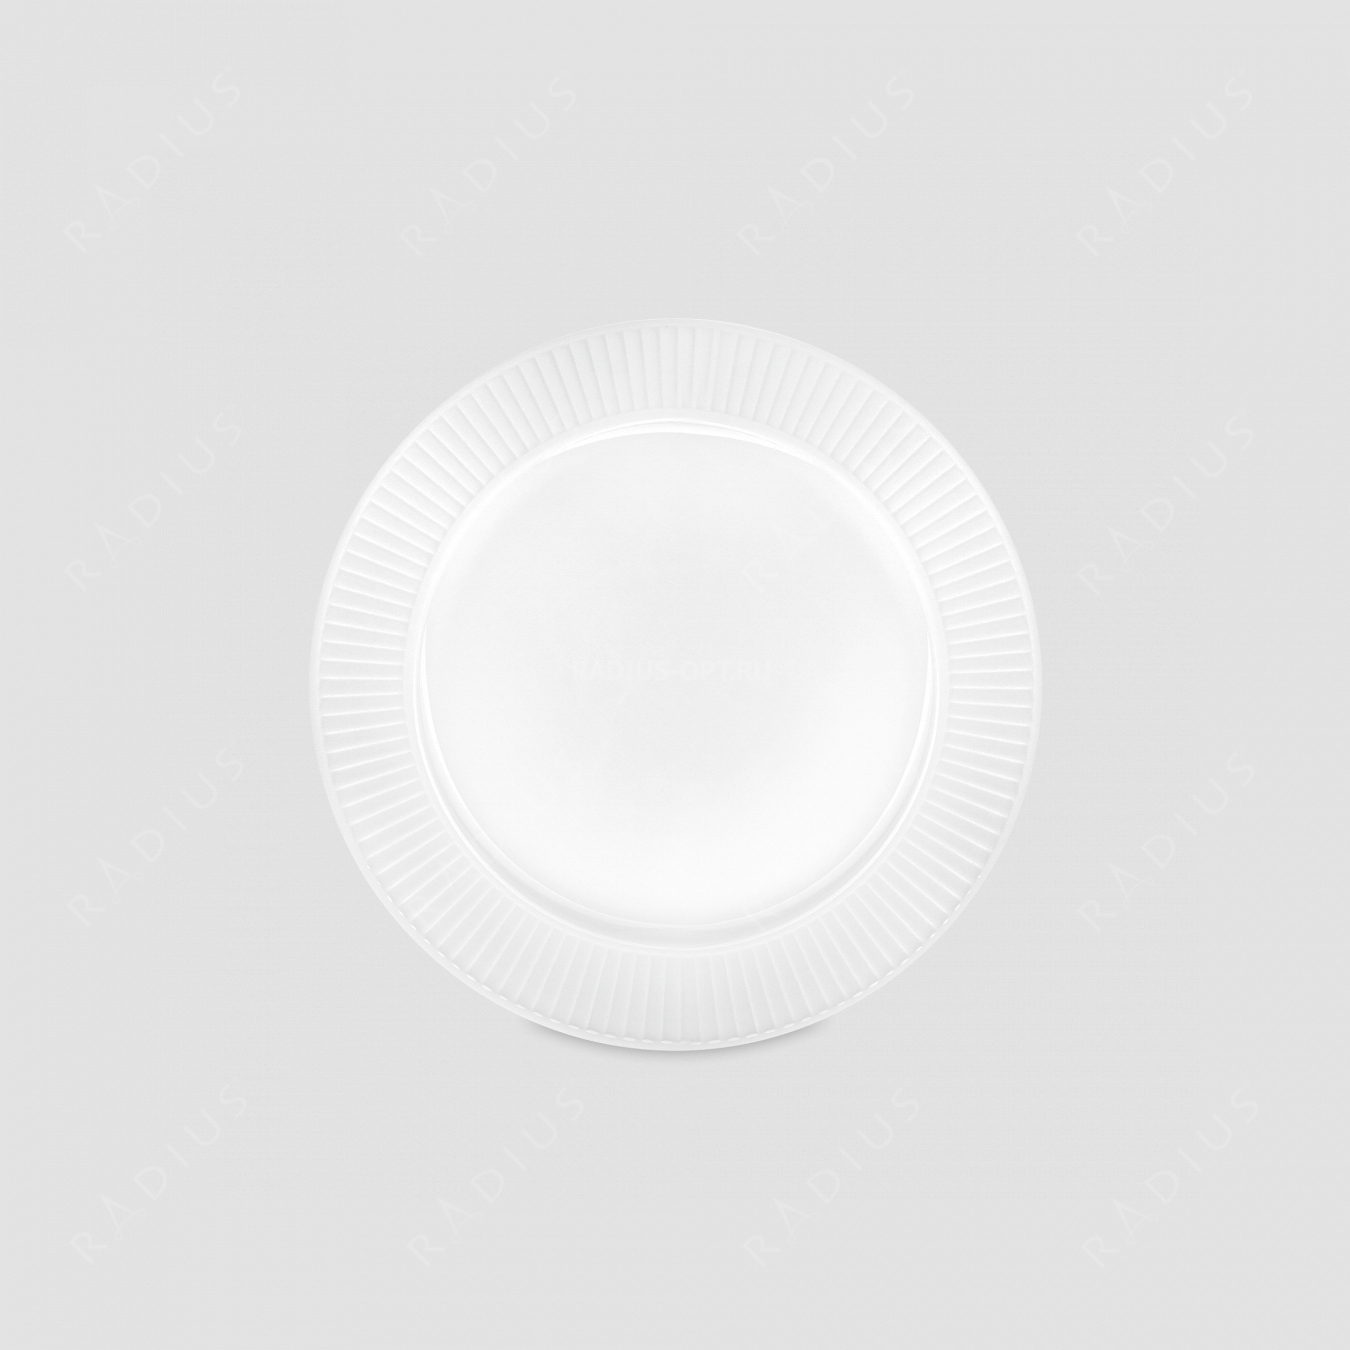 Тарелка закусочная, диаметр: 22 см, материал: фарфор, цвет: белый, серия Plisse, PILLIVUYT, Франция